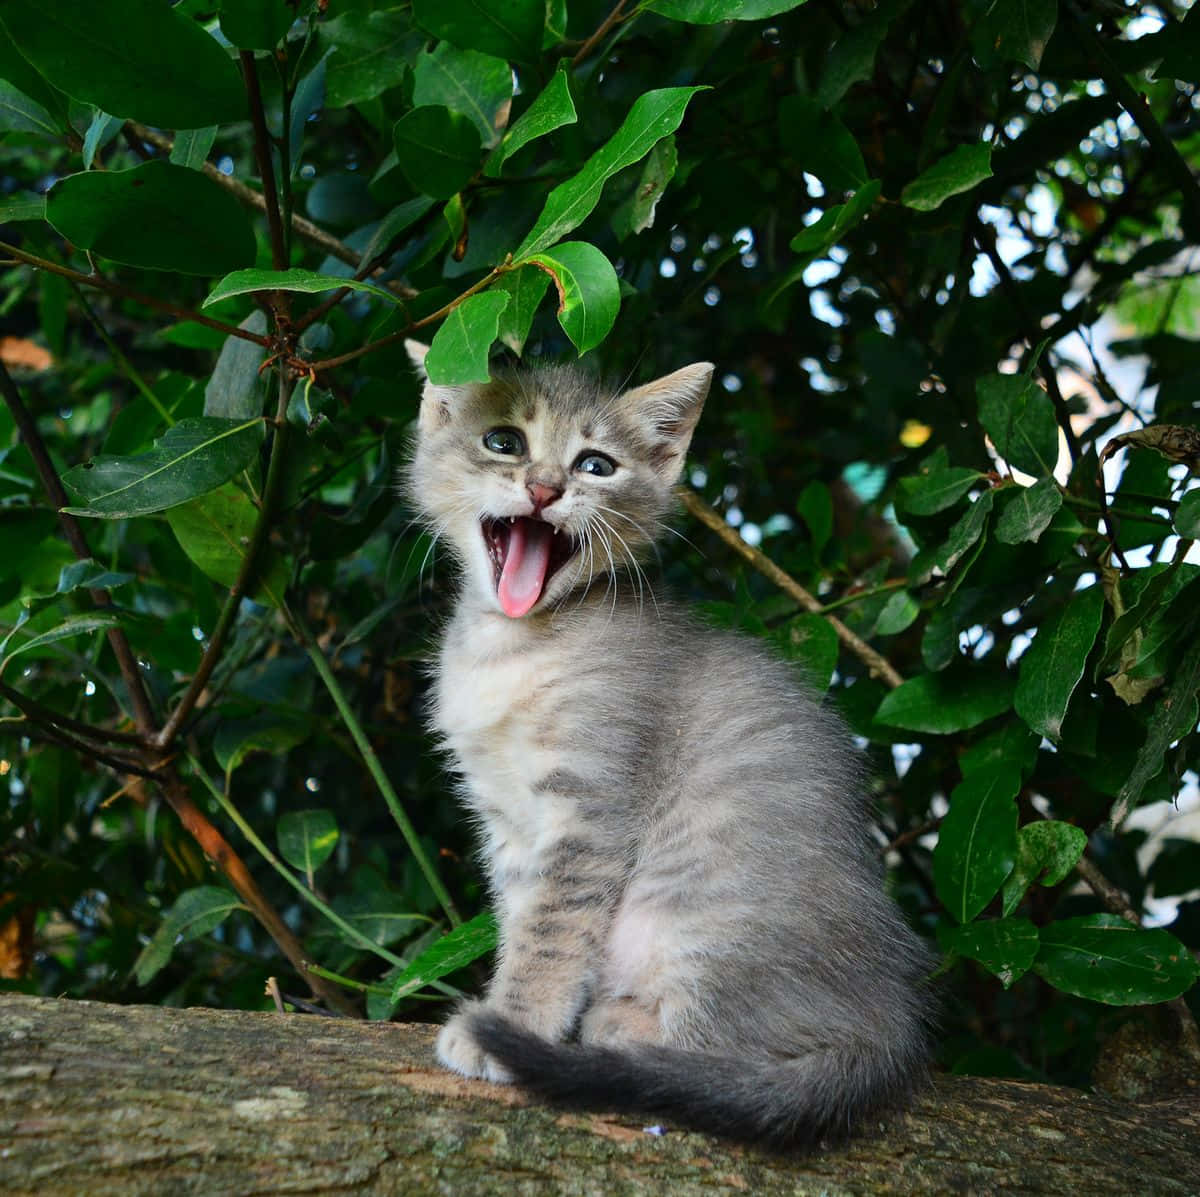 Memesgraciosos De Gatos: Imagen De Un Gato En Una Rama Sacando La Lengua.